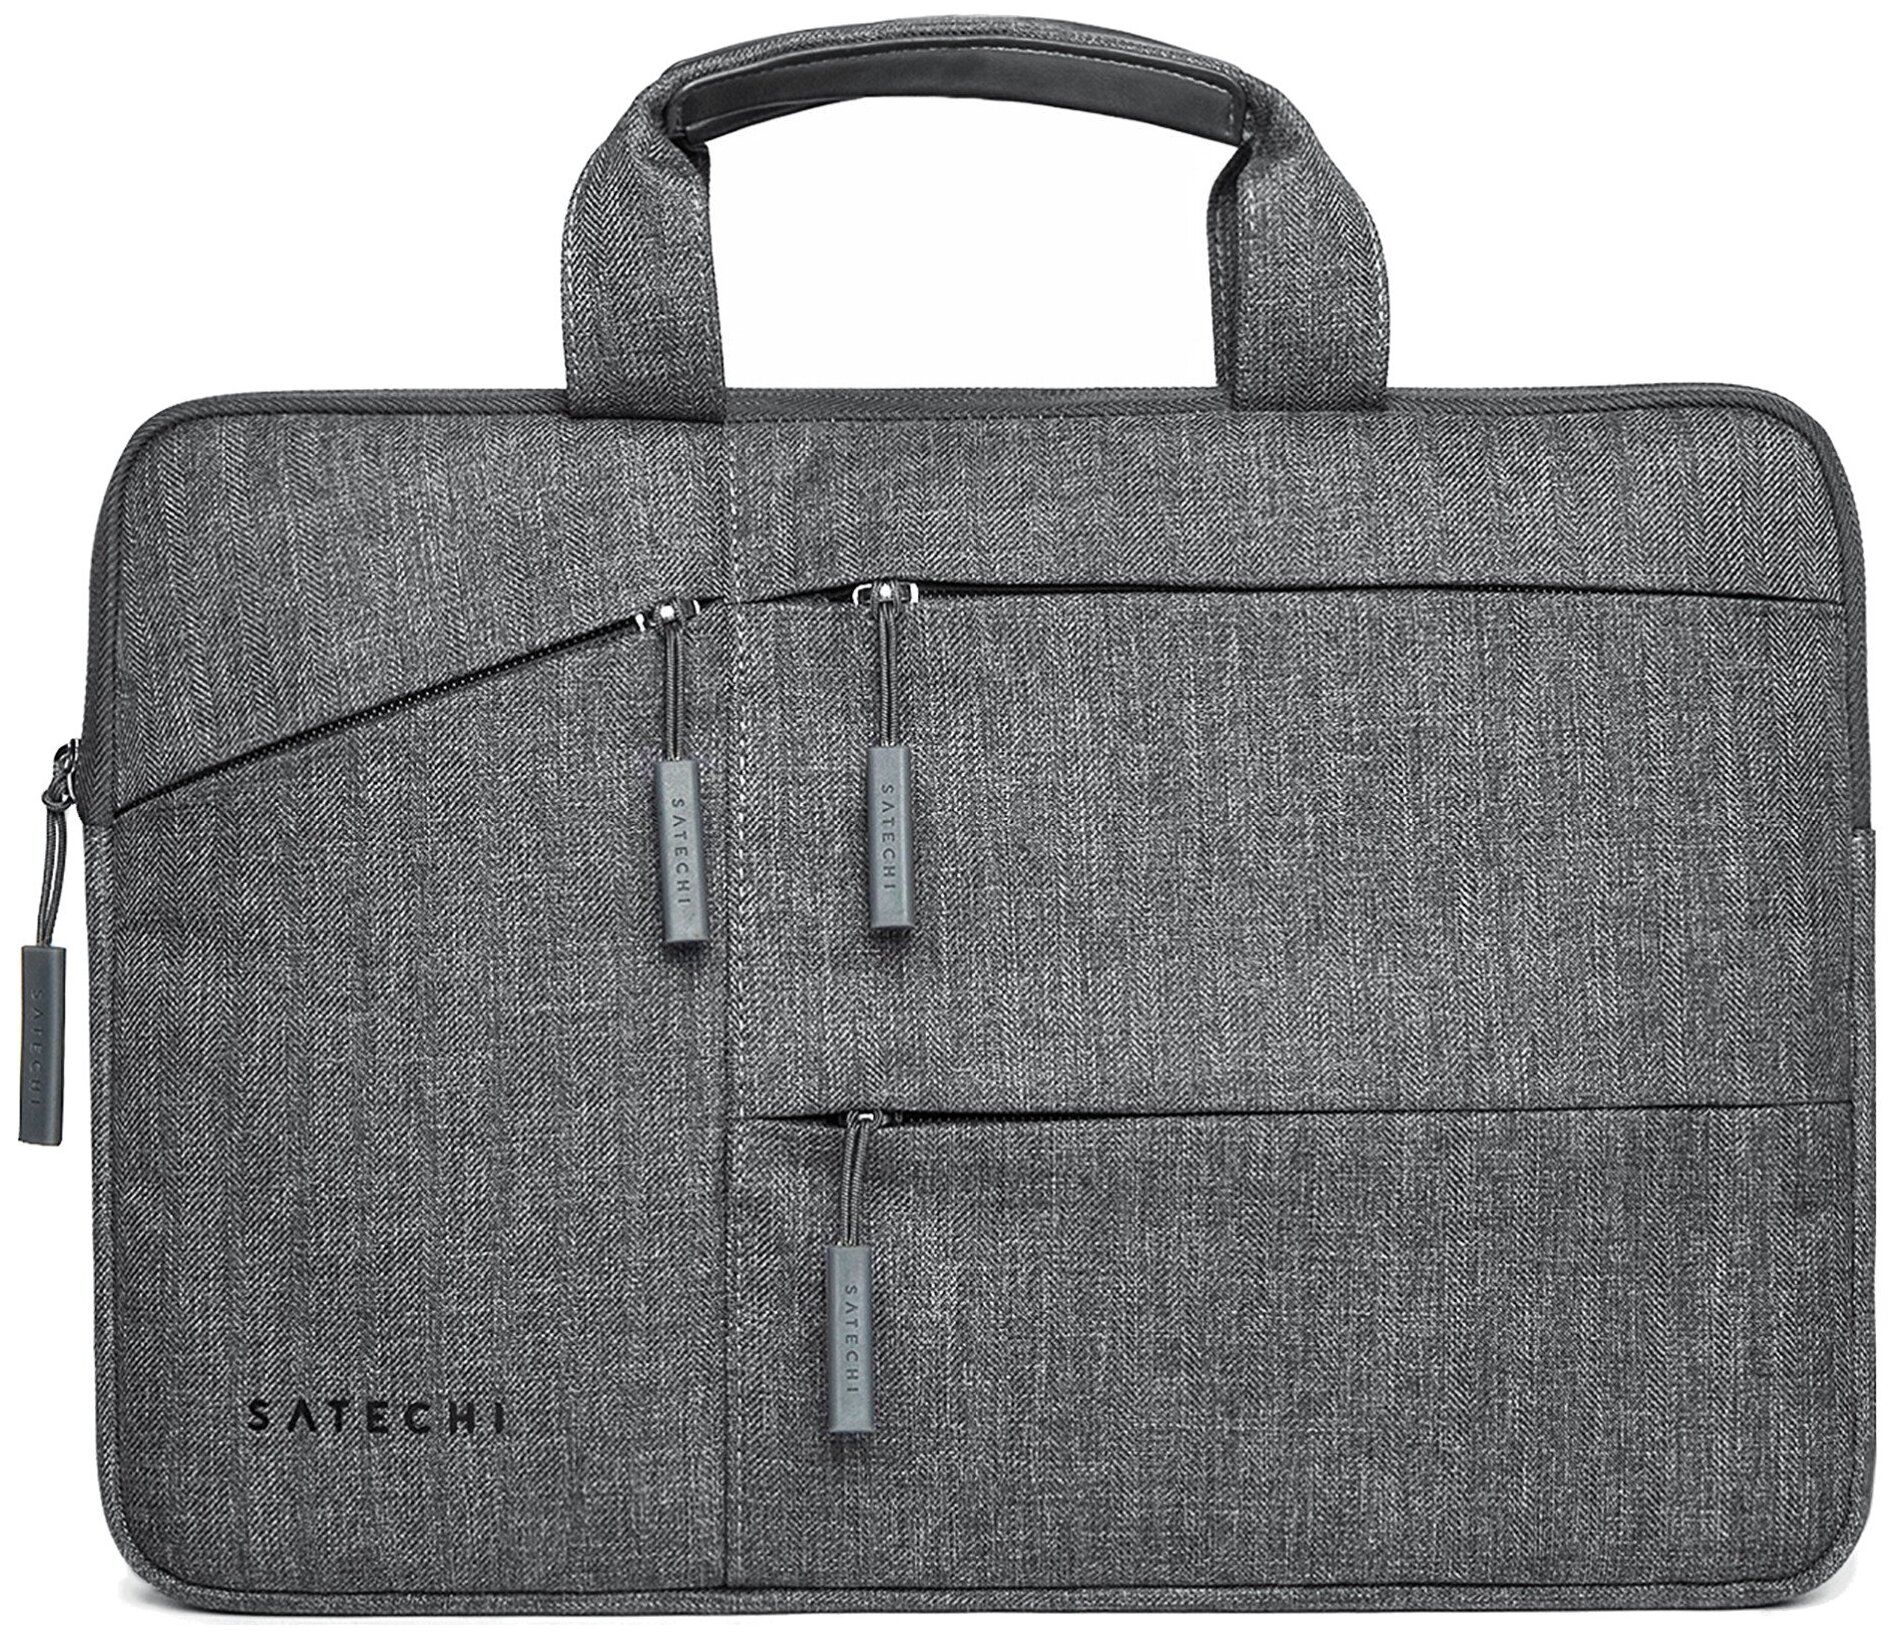 Сумка Satechi Water-Resistant Laptop Carrying Case до 15, 16 дюймов серый.